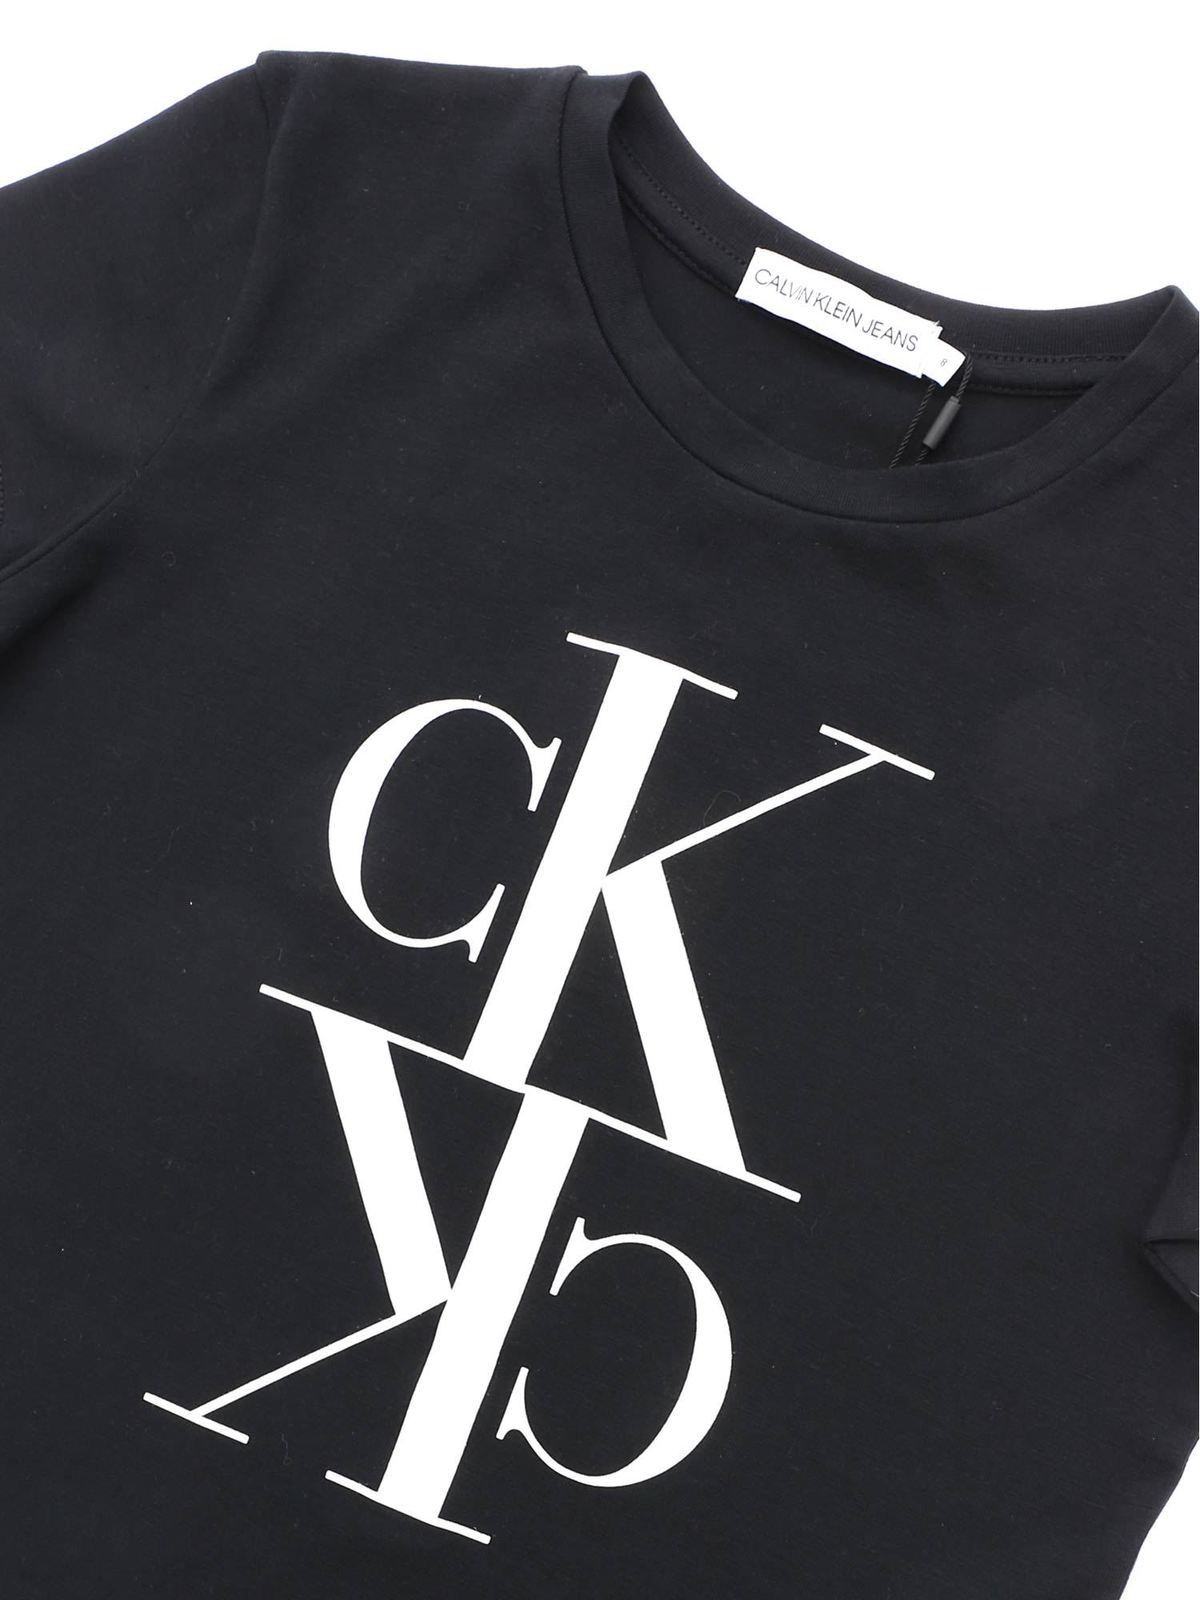 Ck Brand T Shirts Top Sellers, 56% OFF | www.ingeniovirtual.com